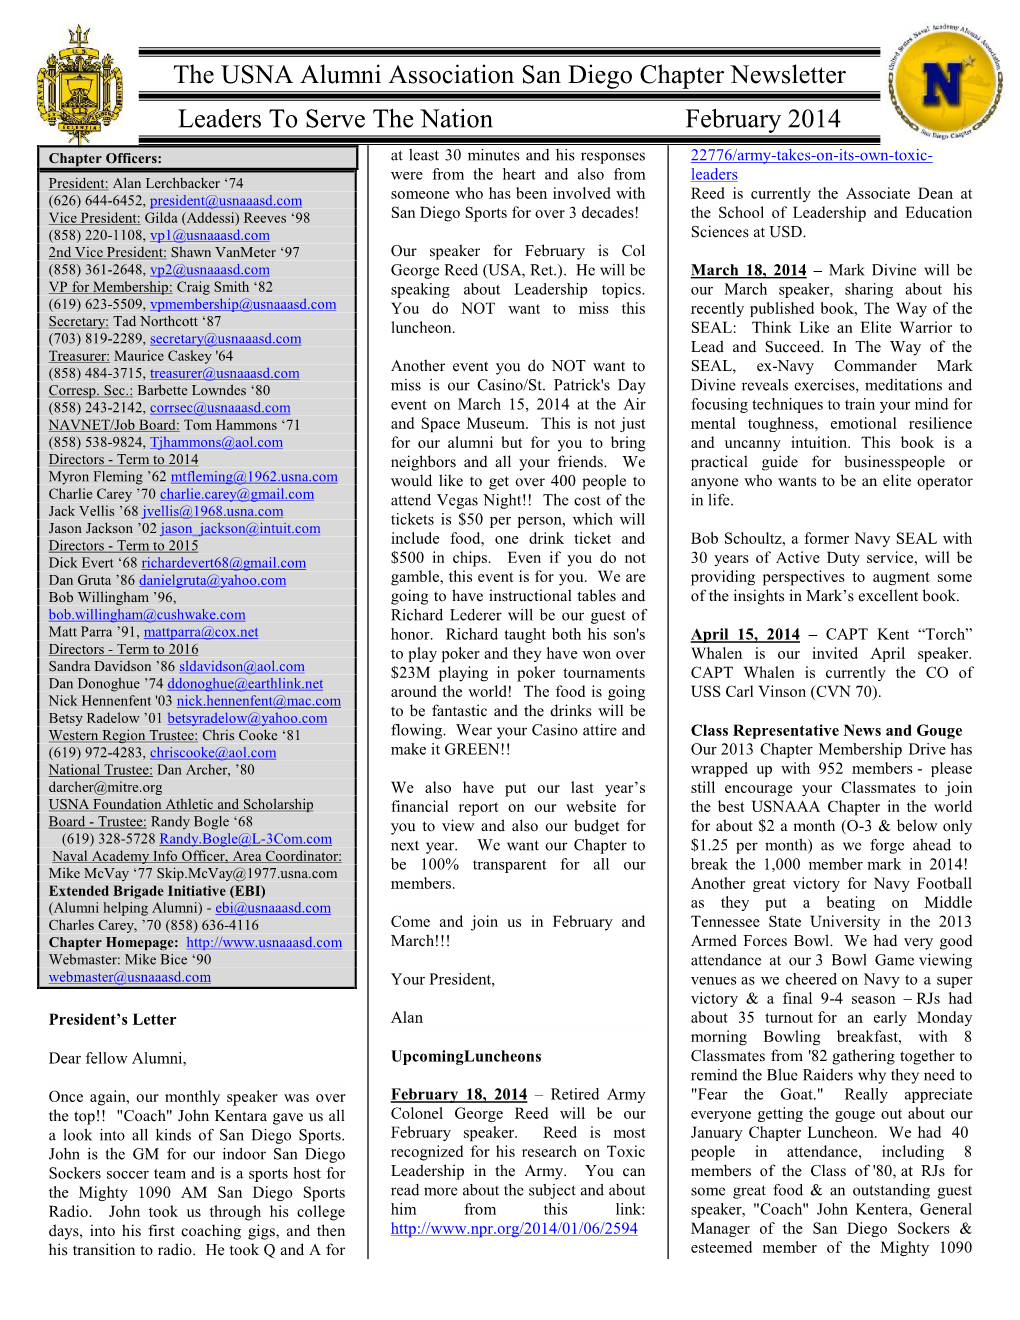 March 2006 USNA Newsletter